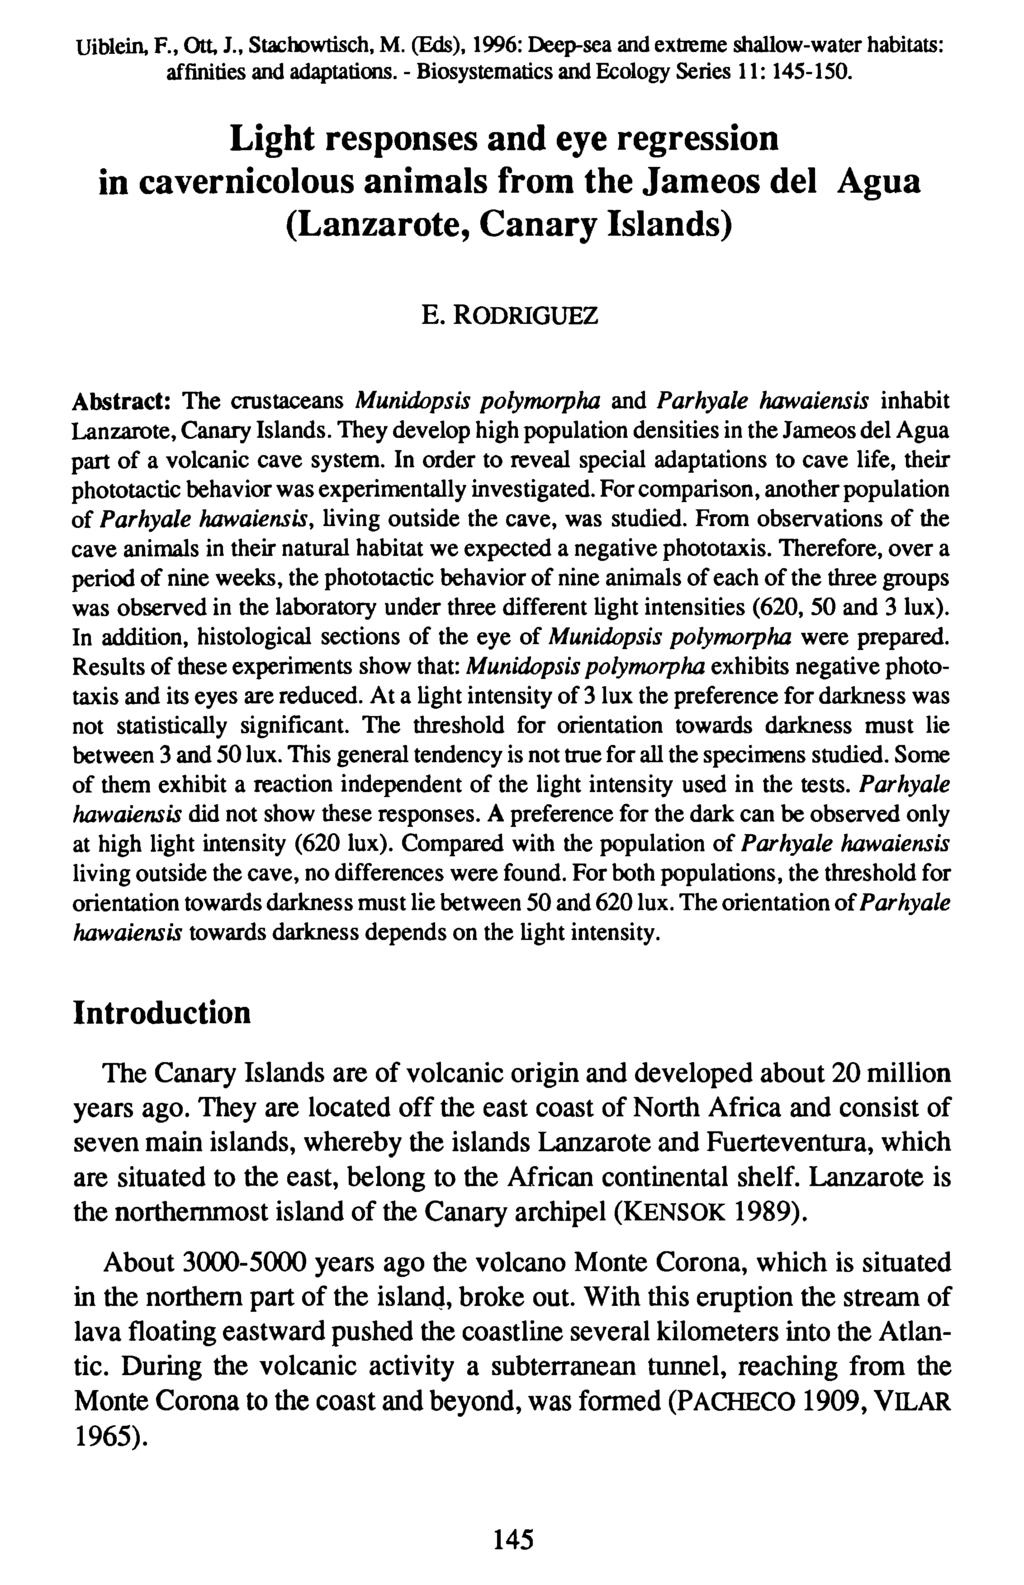 Uiblein, F., Ott, J., Stachowtisch, Akademie d. Wissenschaften M. (Eds), Wien; 1996: download Deep-sea unter www.biologiezentrum.at and extreme shallow-water habitats: affinities and adaptations.